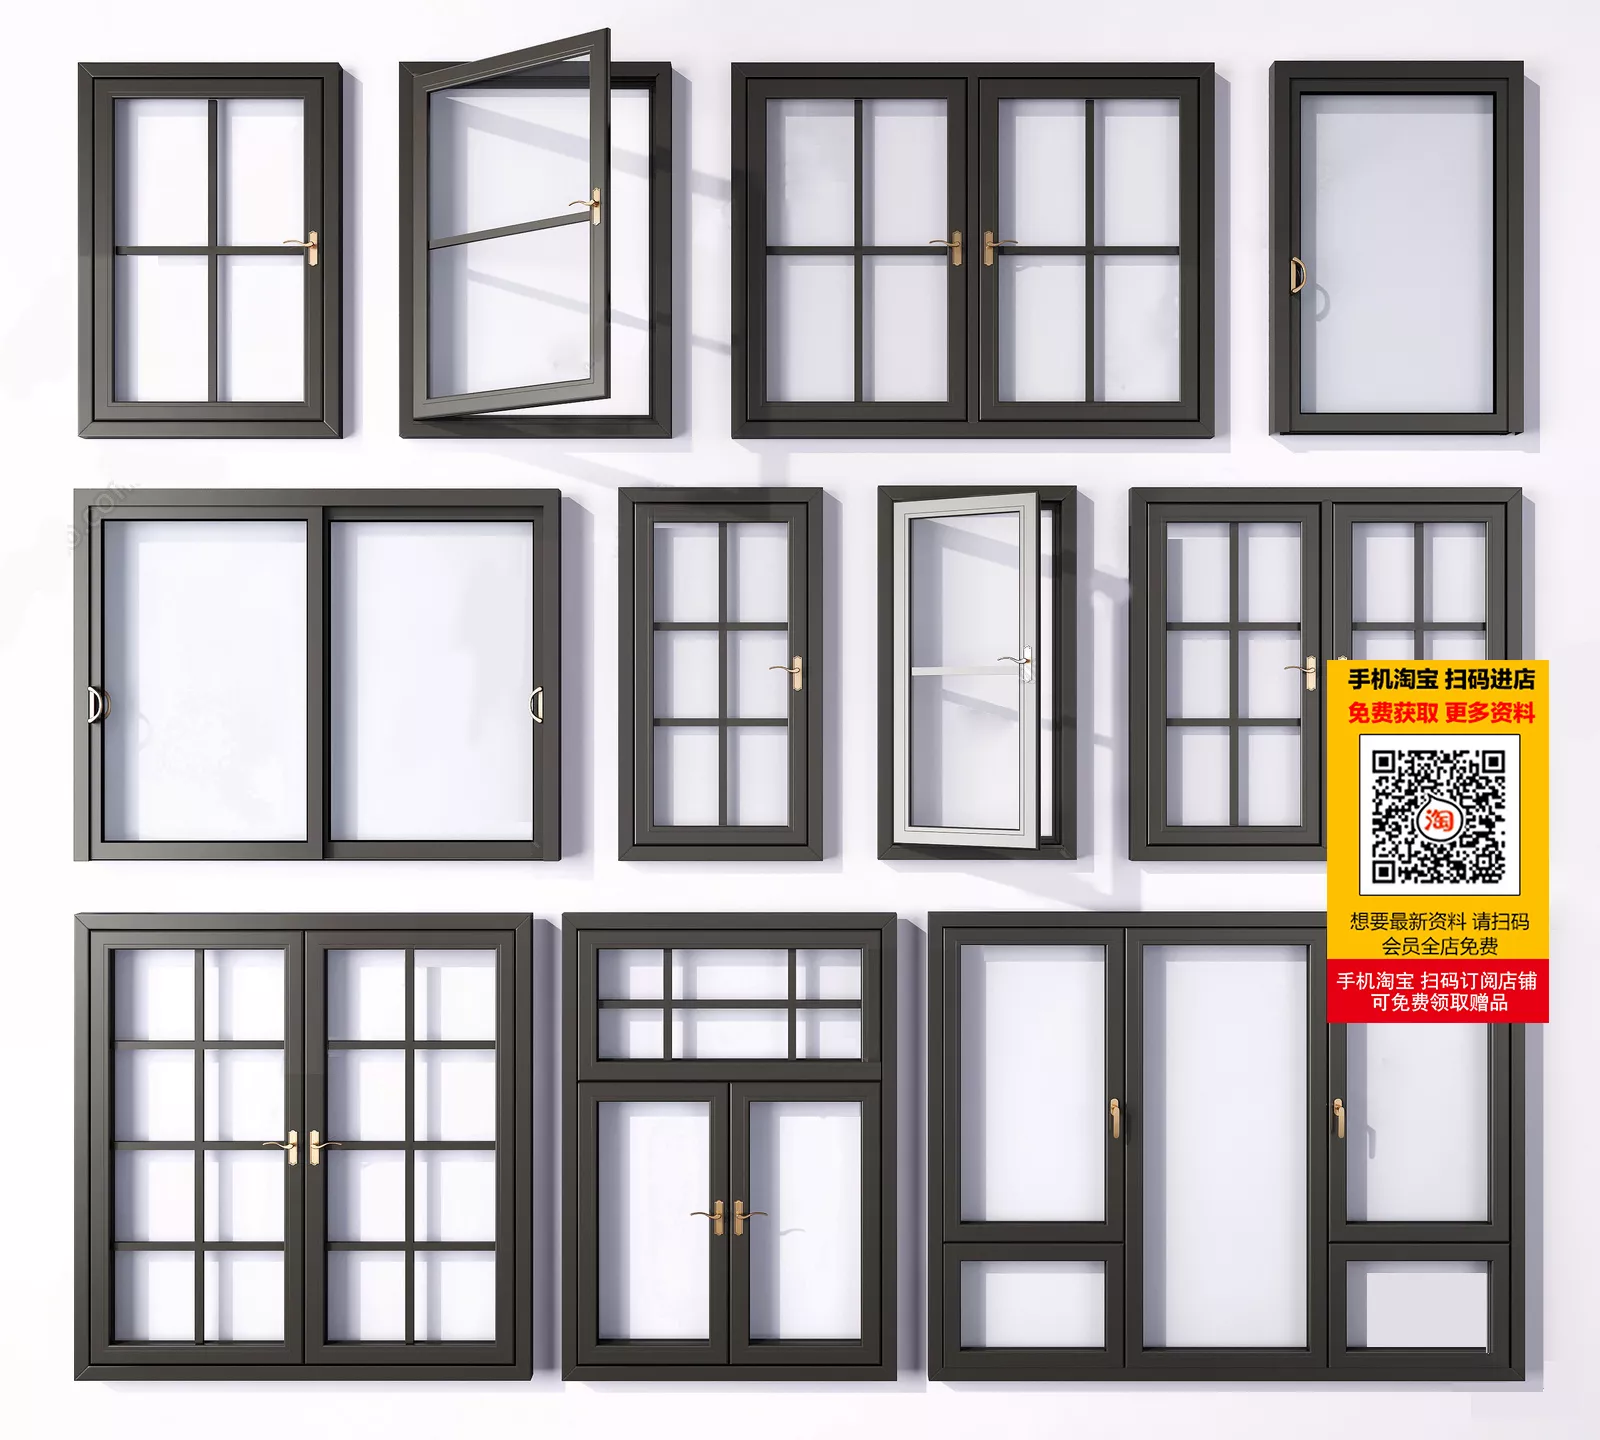 MODERN WINDOWS - SKETCHUP 3D MODEL - VRAY OR ENSCAPE - ID16742